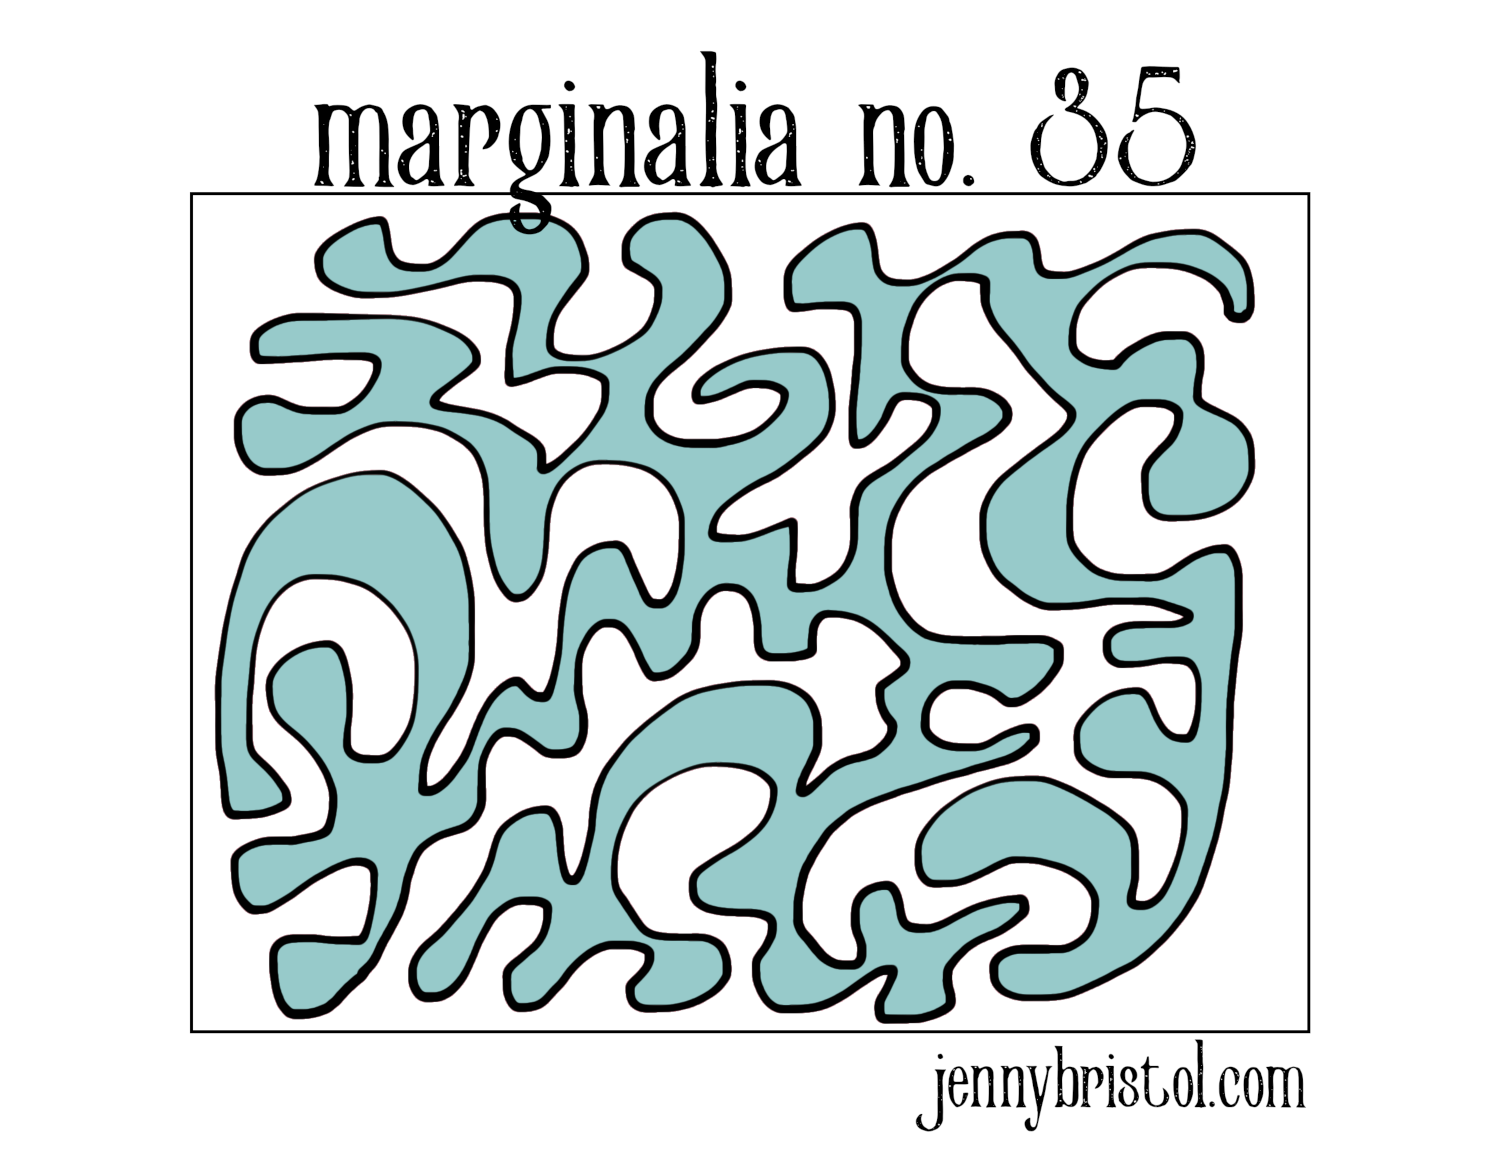 Marginalia no. 35 to post